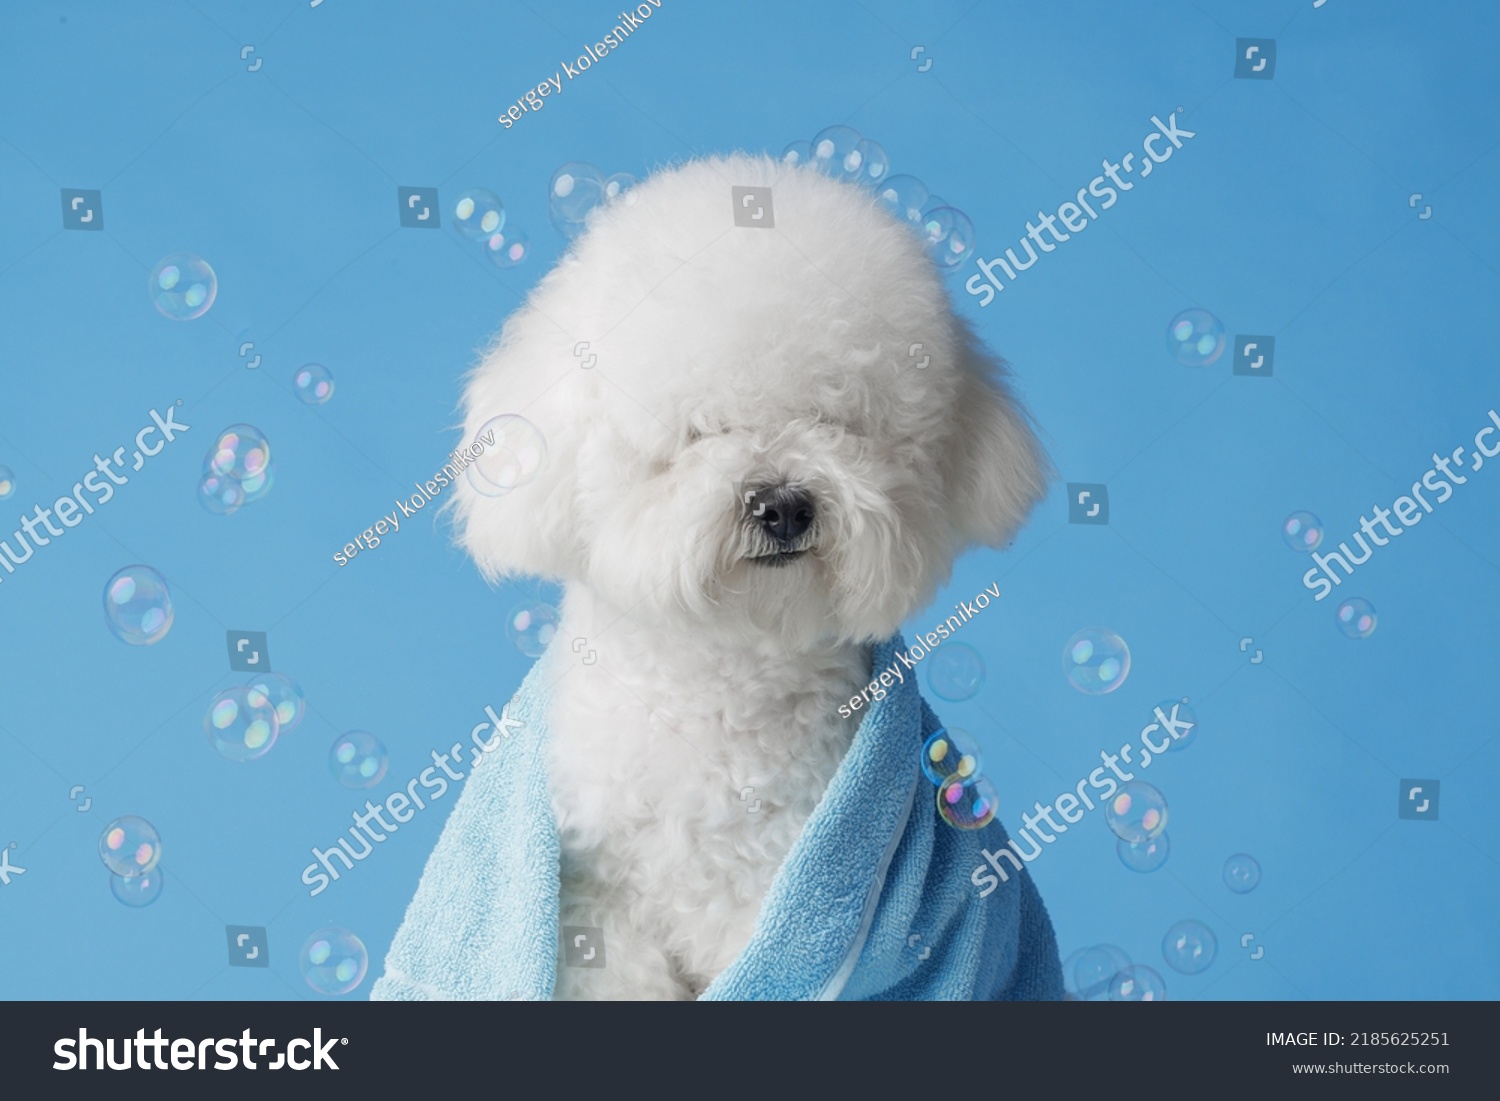 how do you bathe a bichon frise puppy